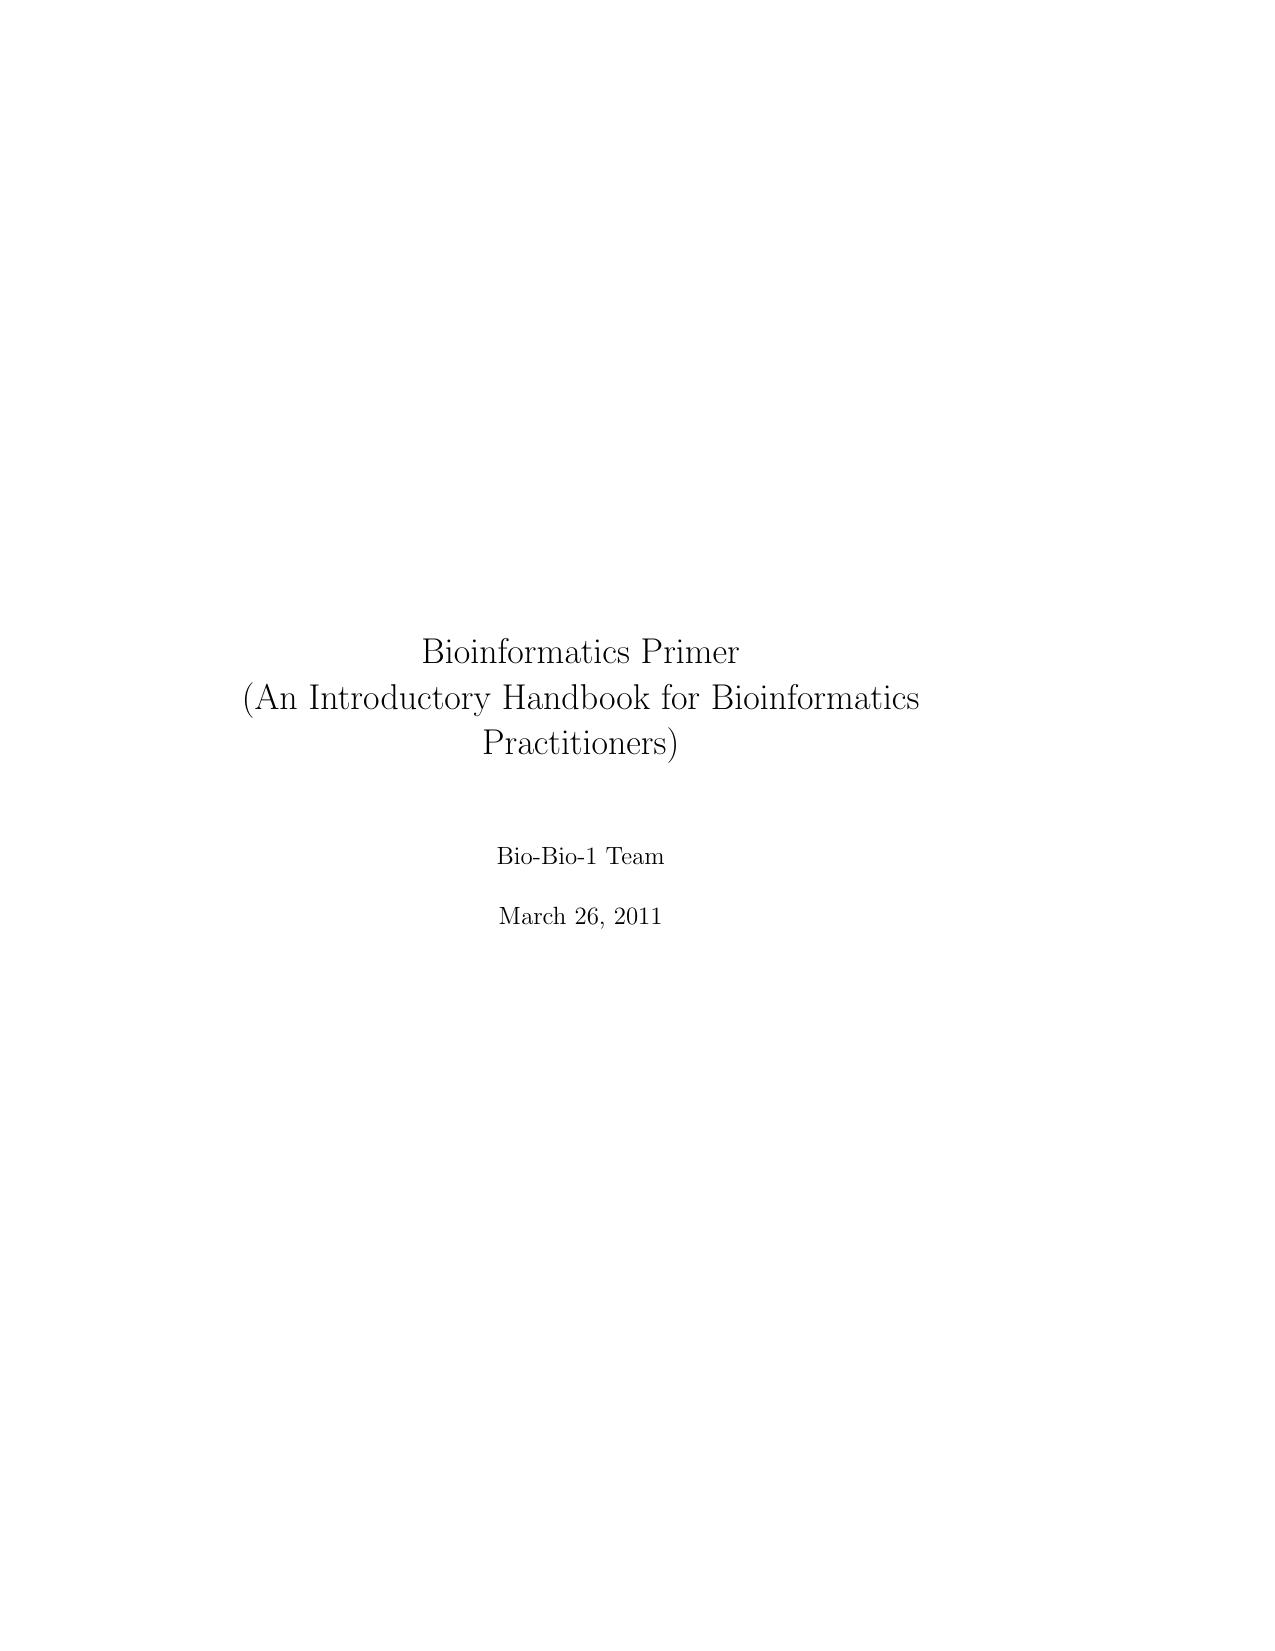 Bioinformatics Primer (An Introductory Handbook for Bioinformatics Practitioners) 2011